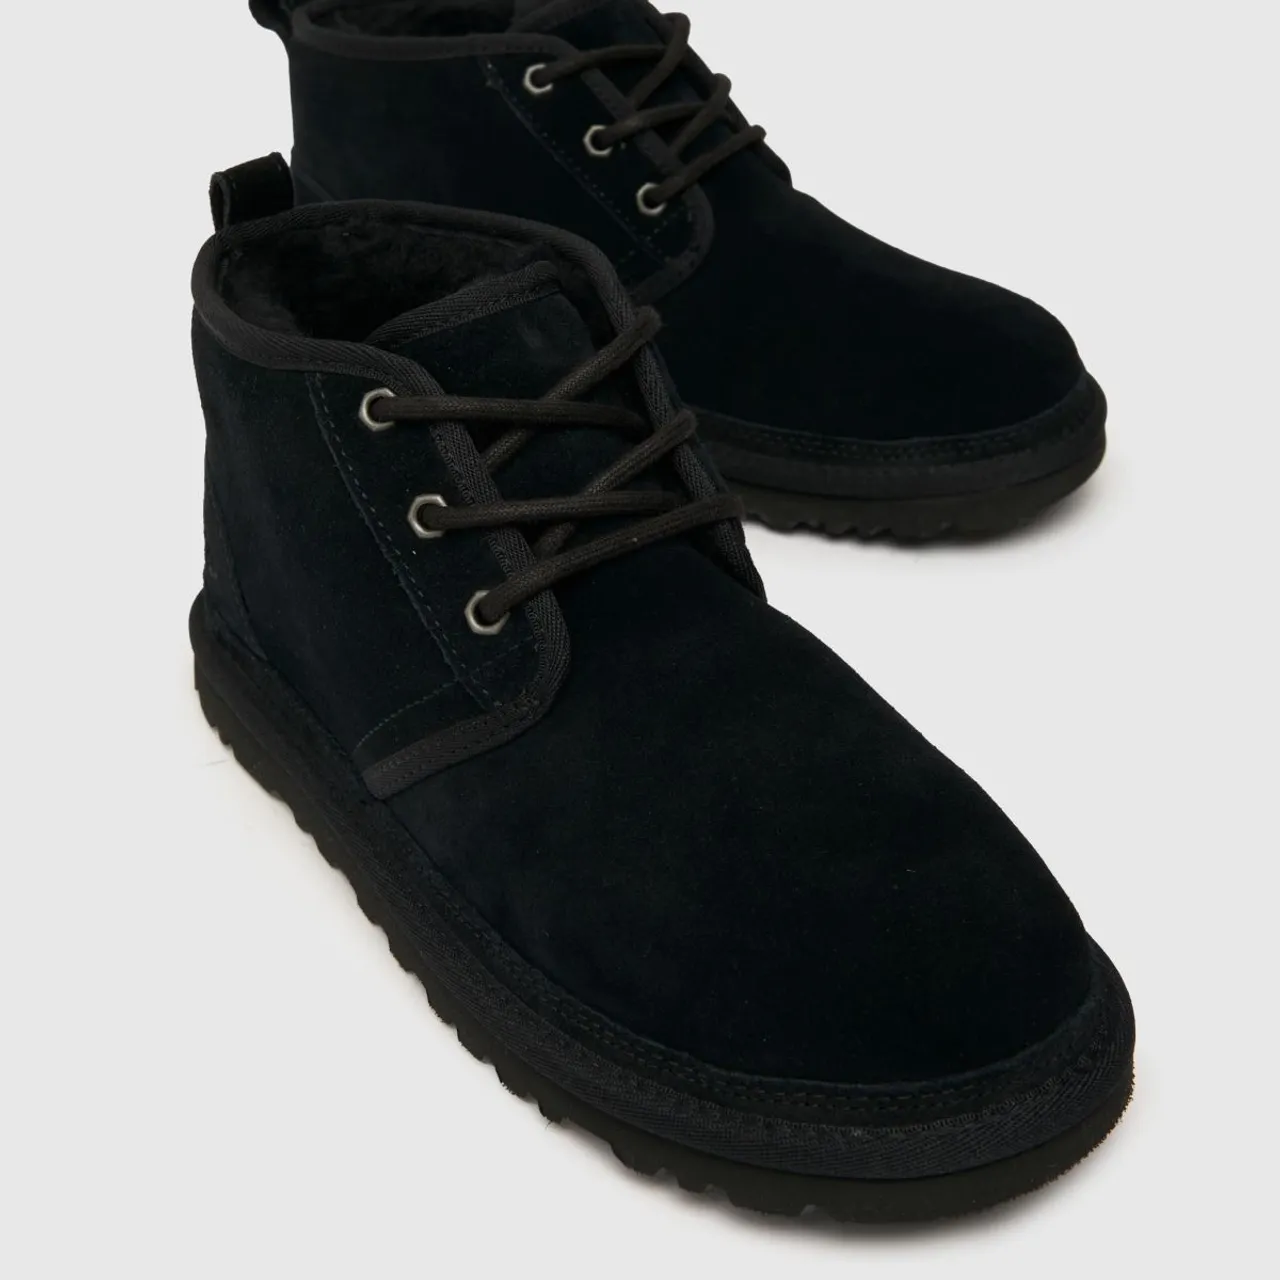 Ugg Women's Black Neumel Boots